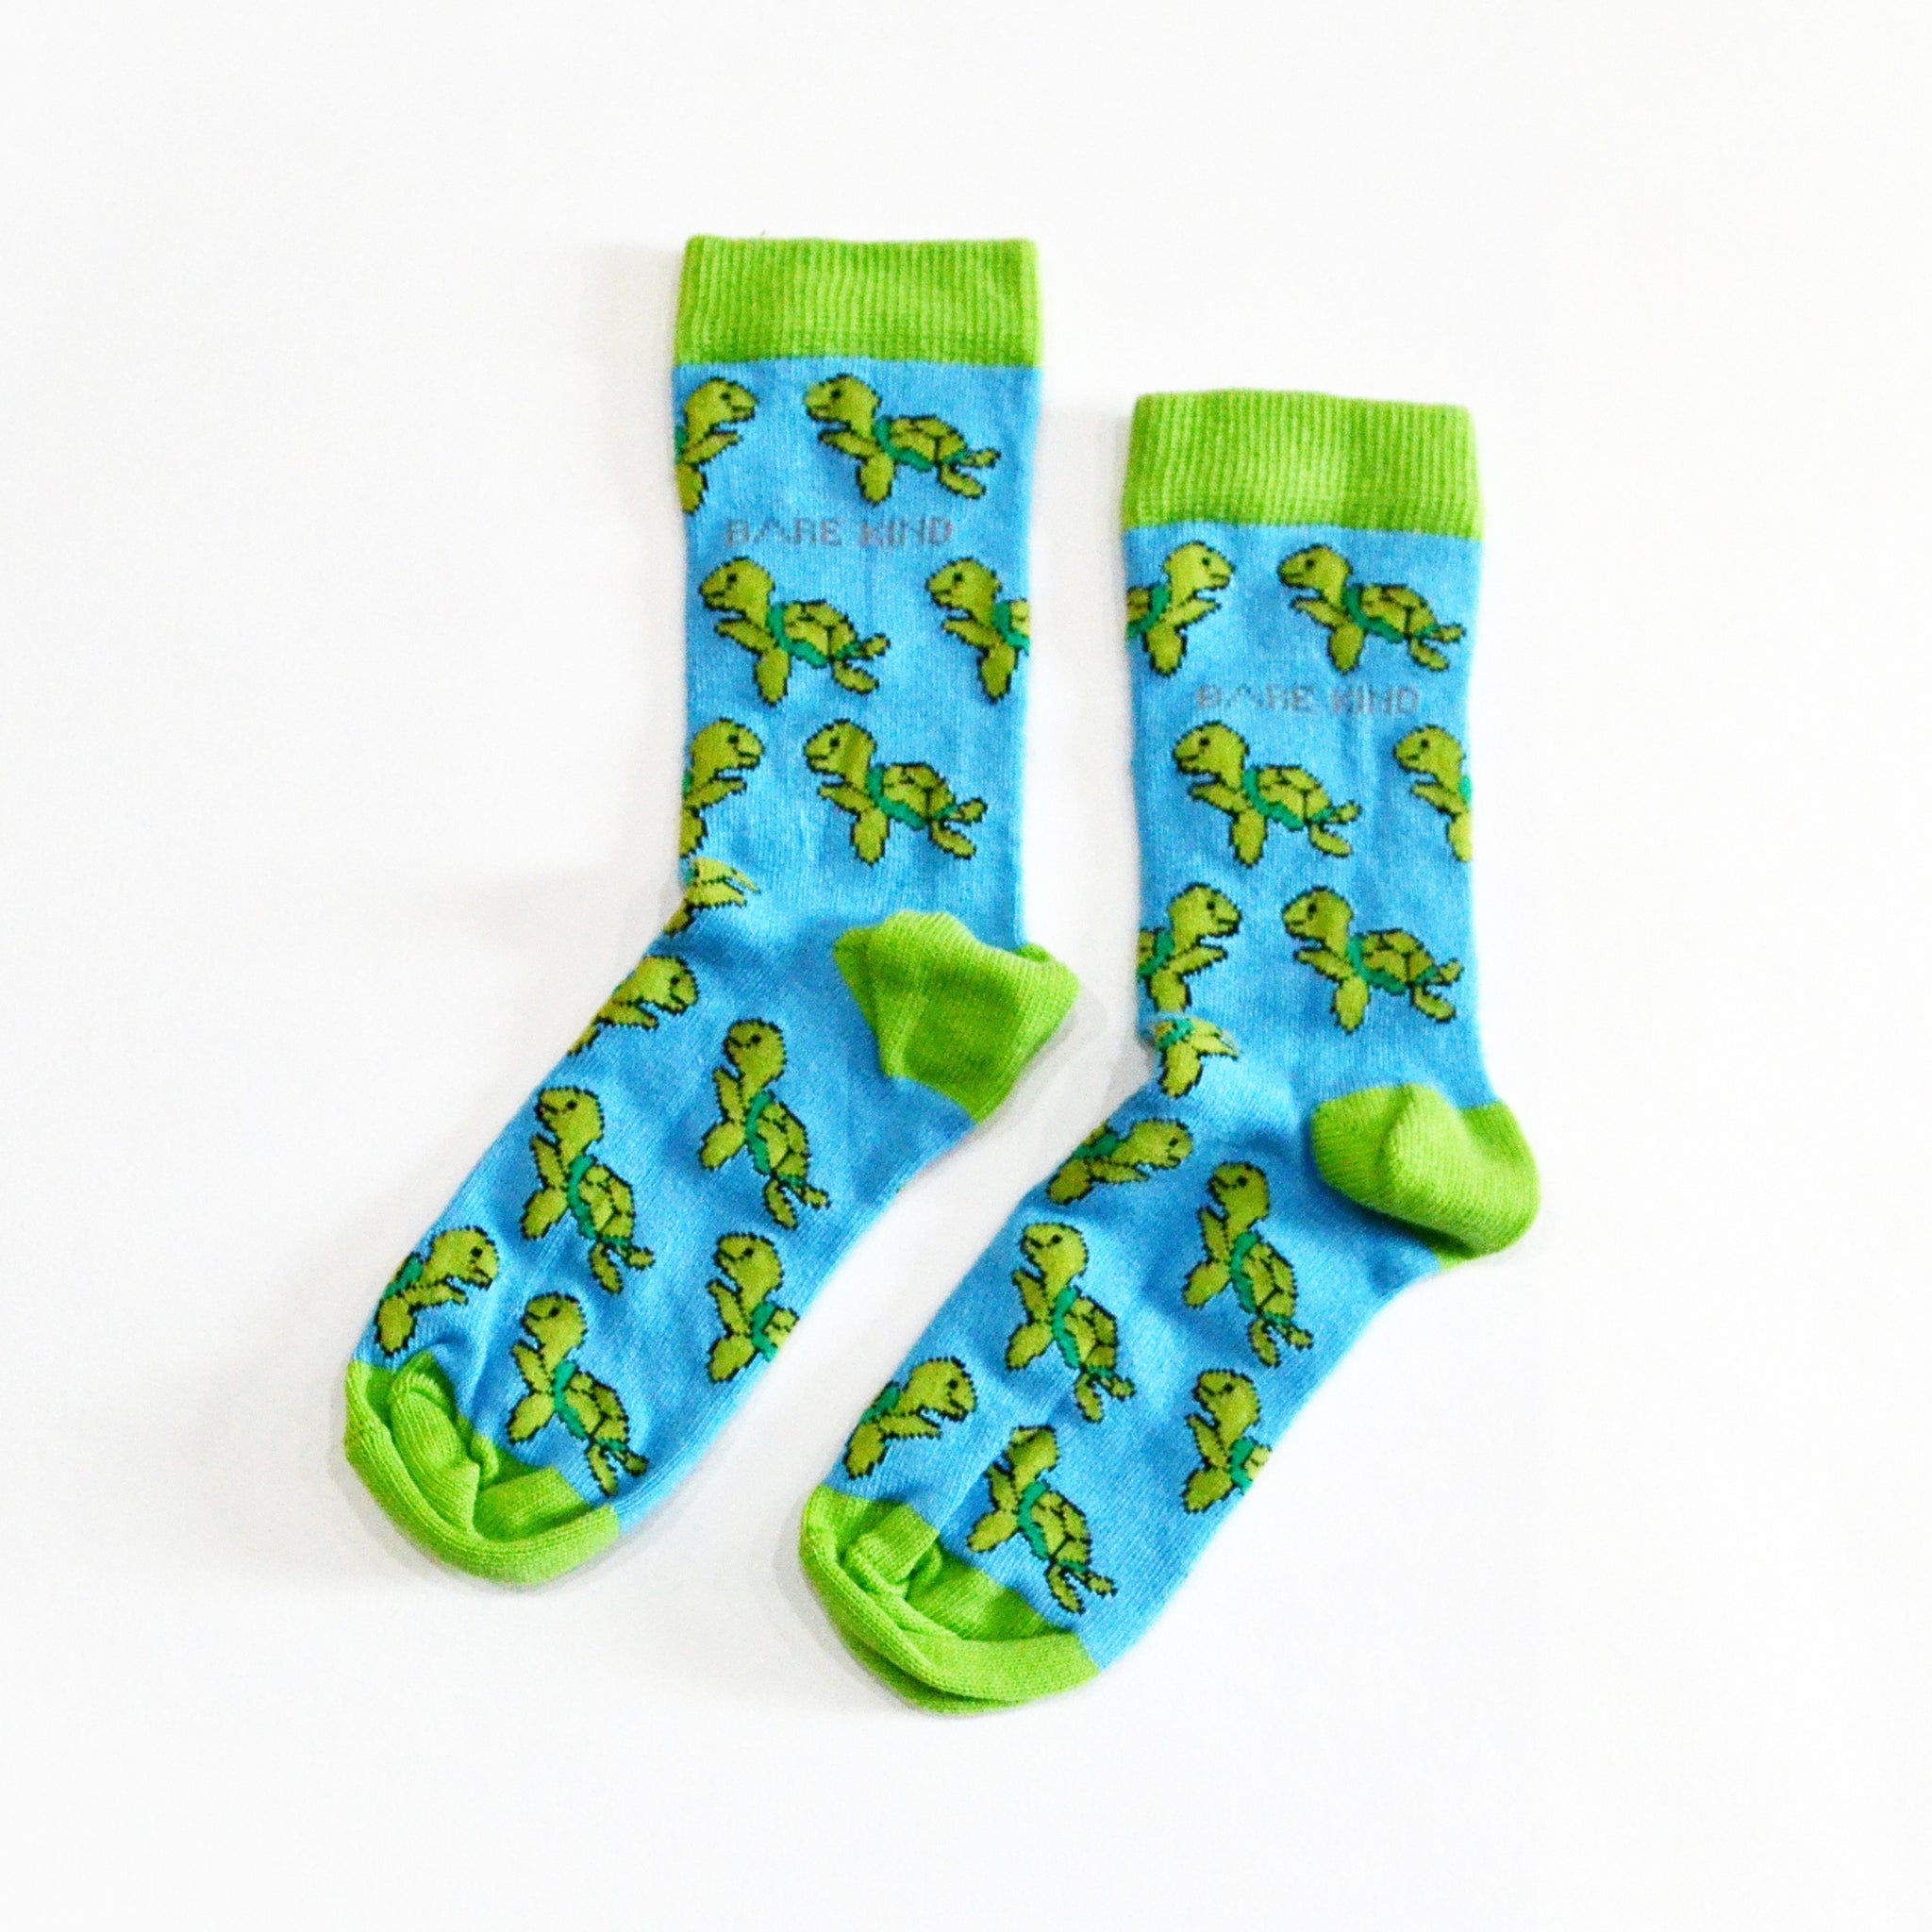 Bare Kind Bamboo Socks Kids – Turtles